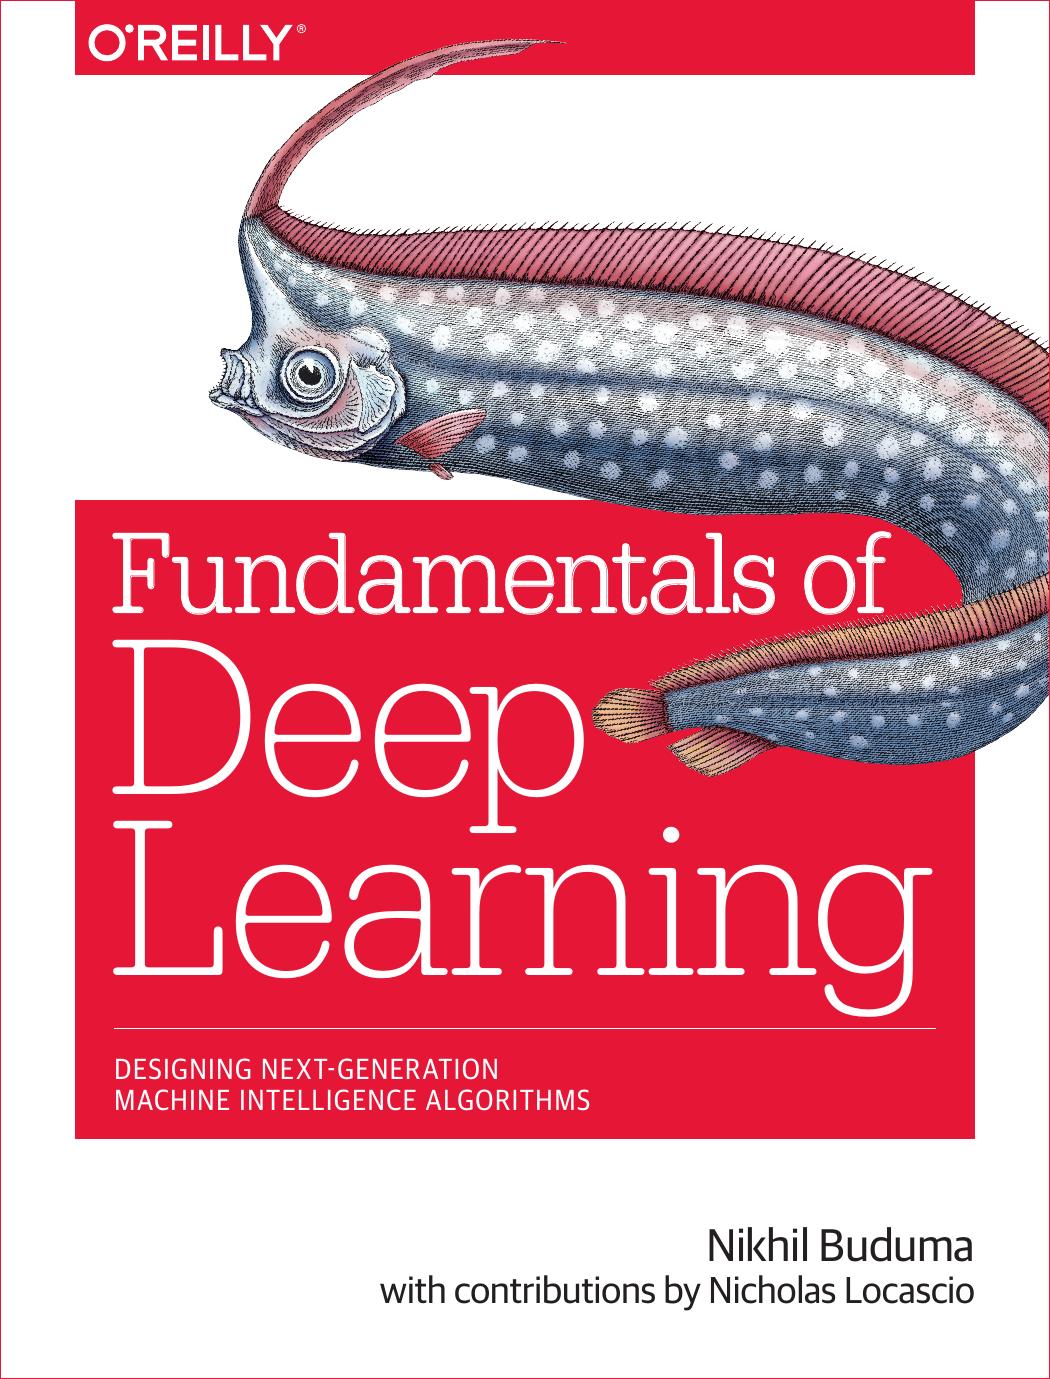 Fundamentals of Deep Learning by Nikhil Buduma